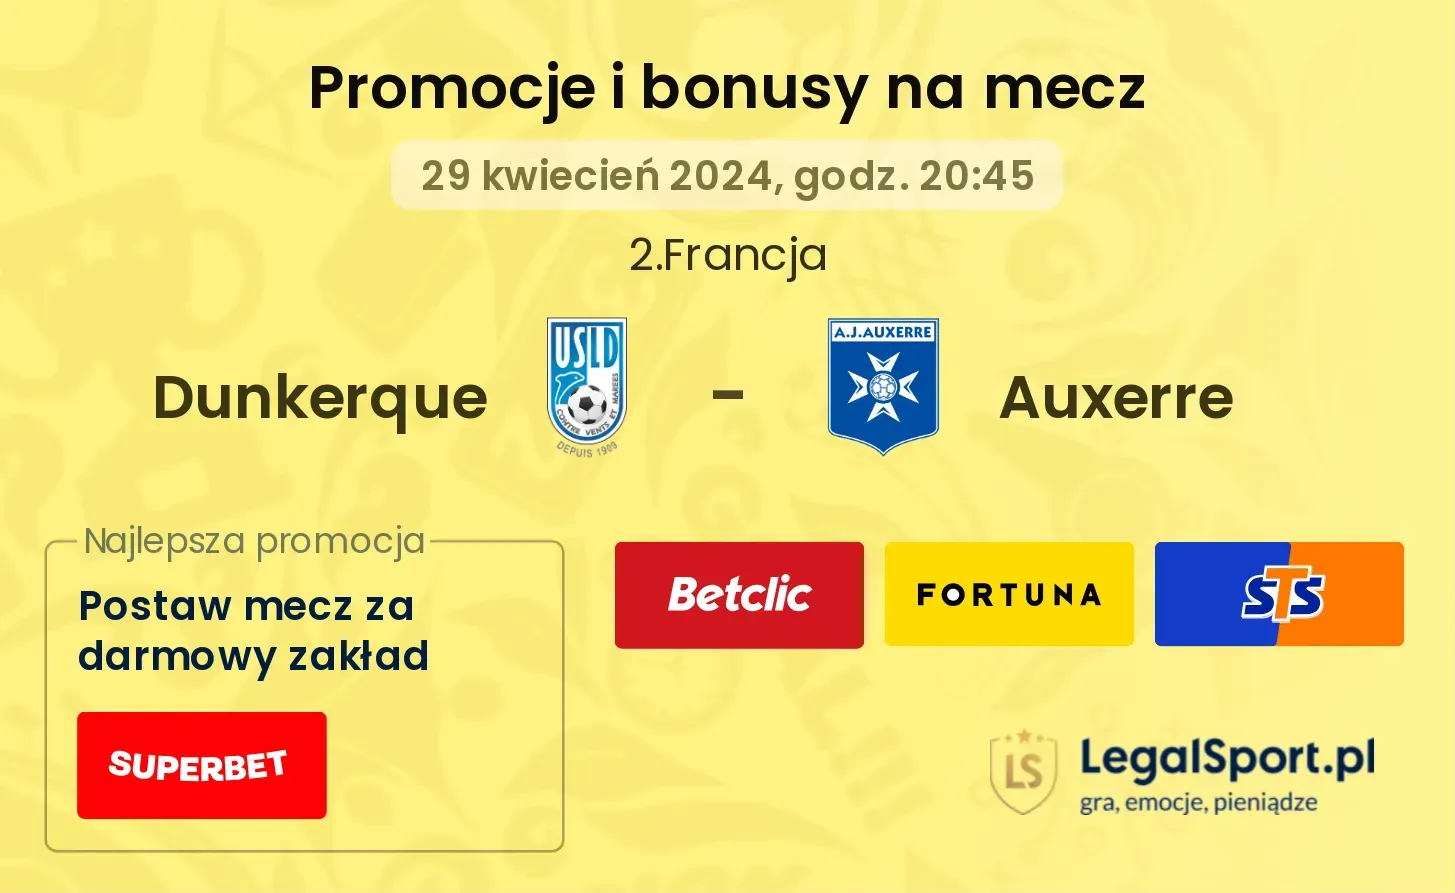 Dunkerque - Auxerre promocje bonusy na mecz